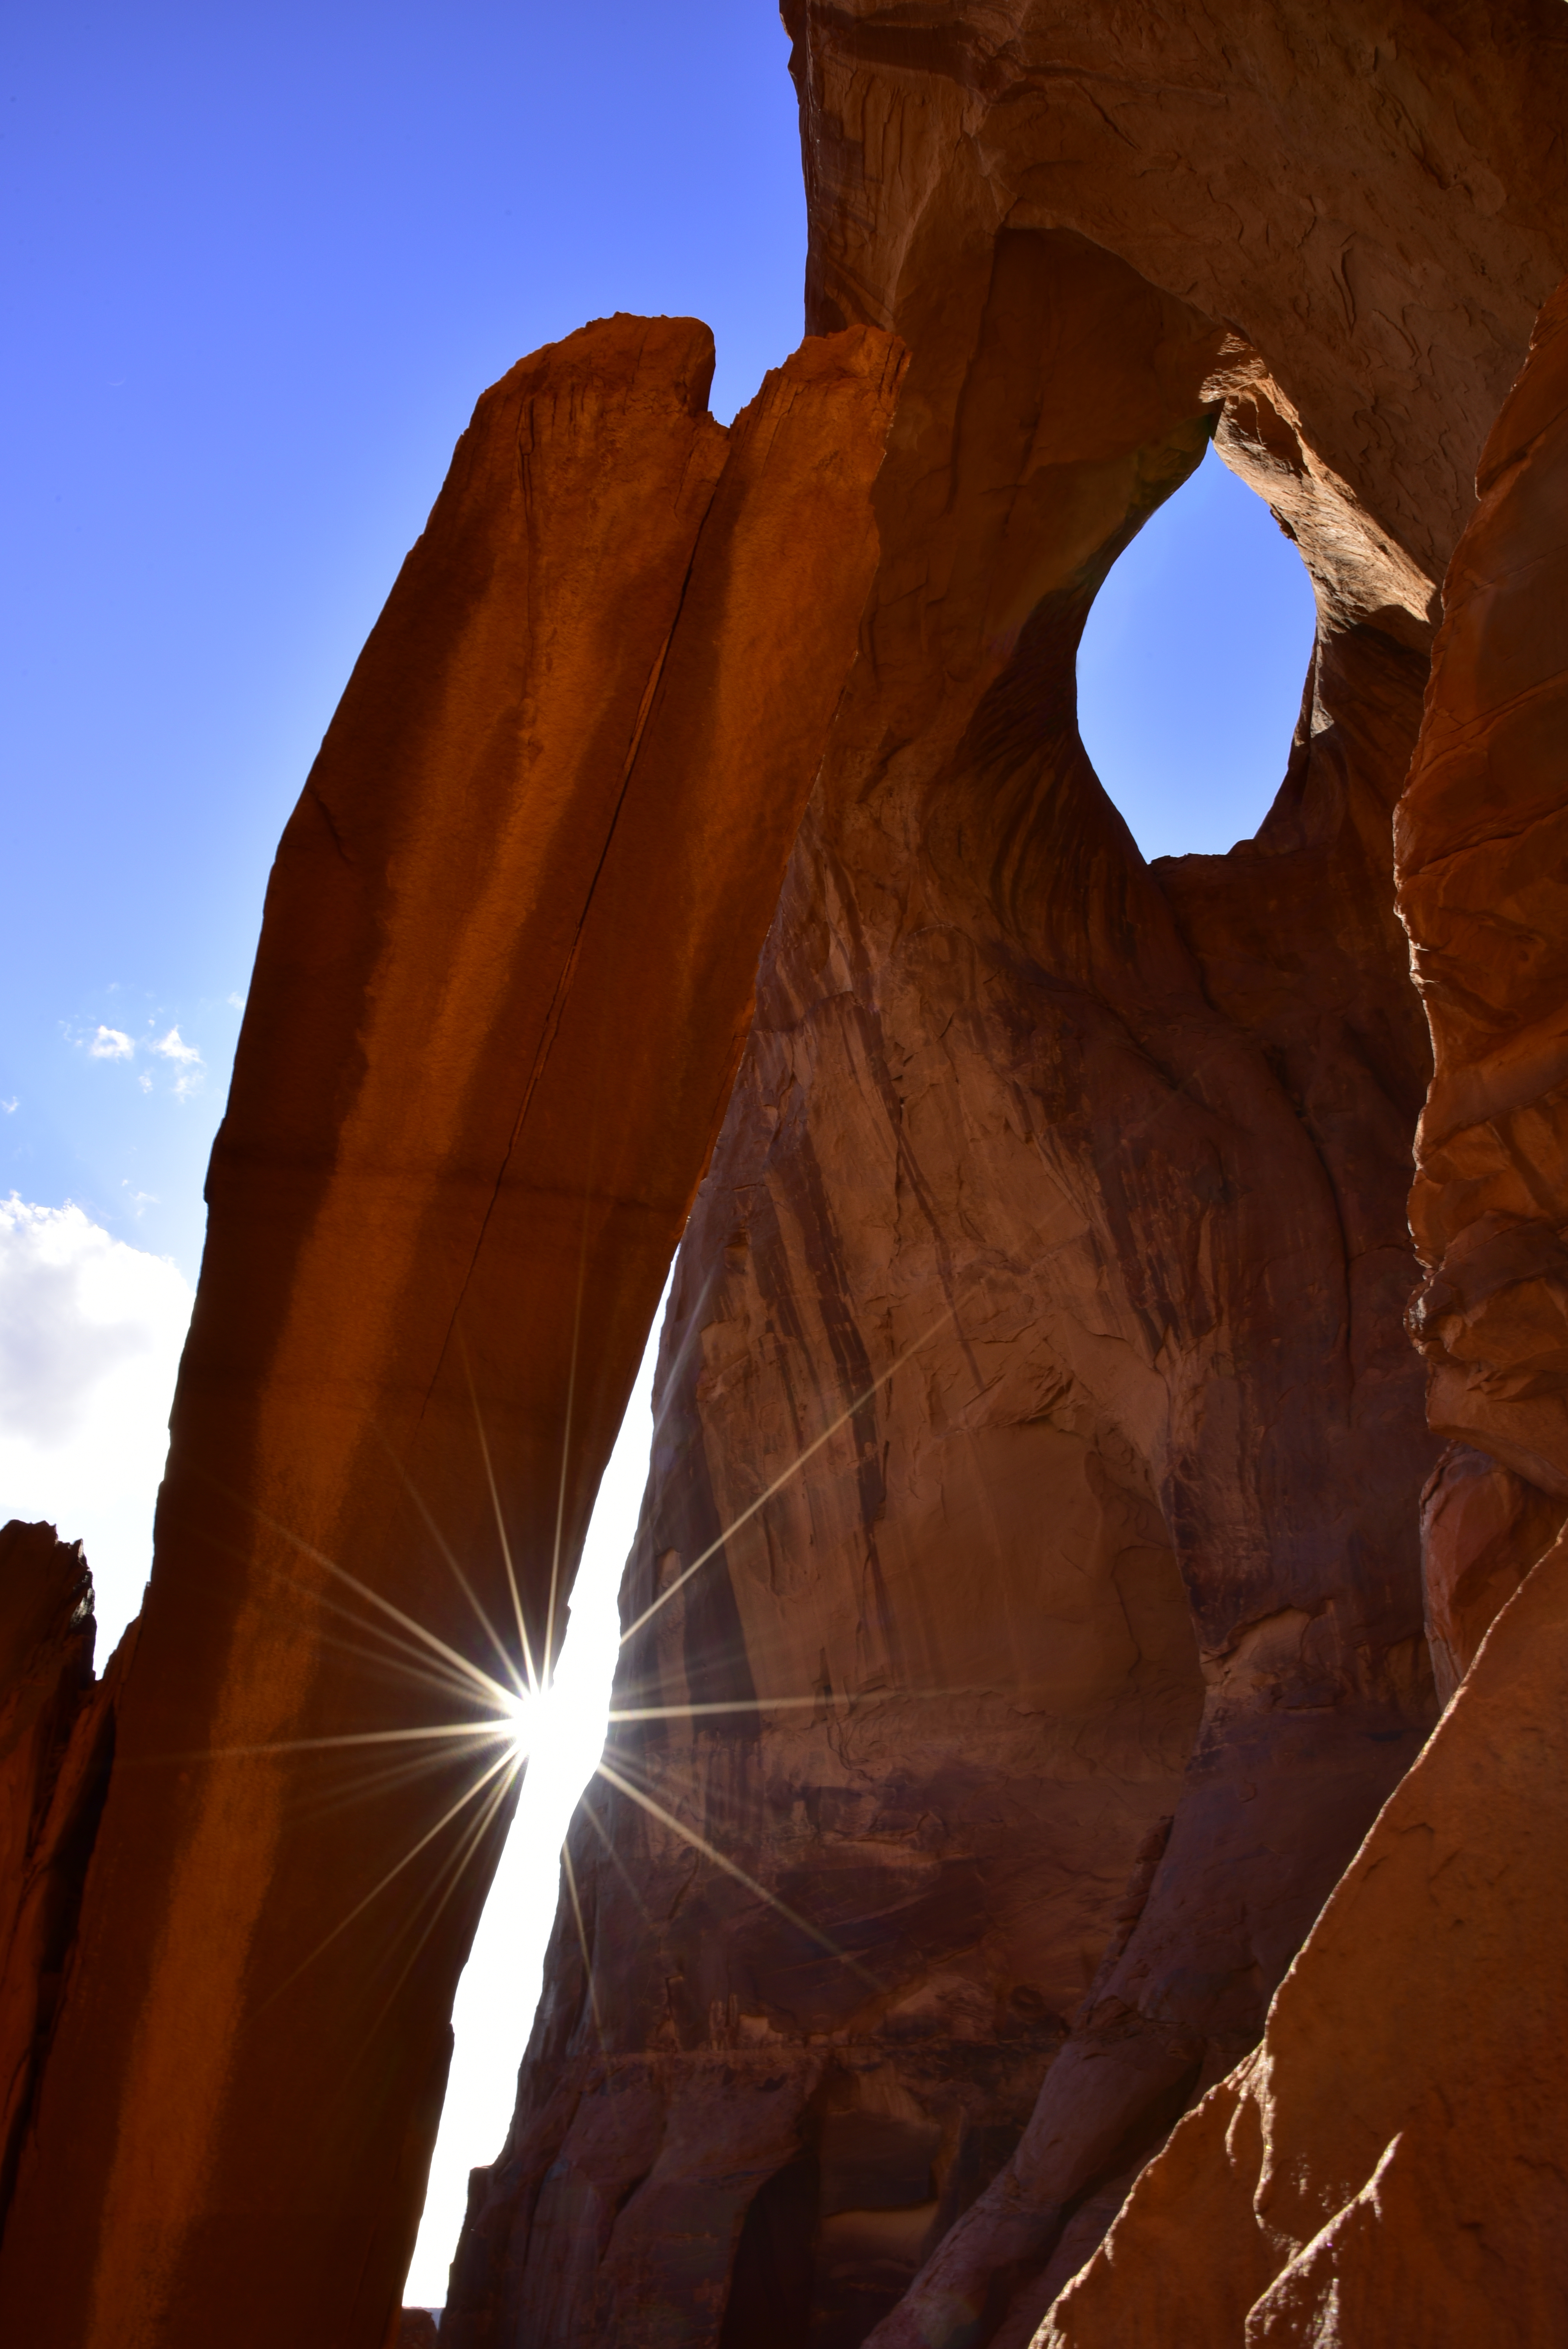 Sunstar at Sun’s Eye Arch (upper right)  -  Backcountry, Monument Valley Navajo Tribal Park, Arizona  